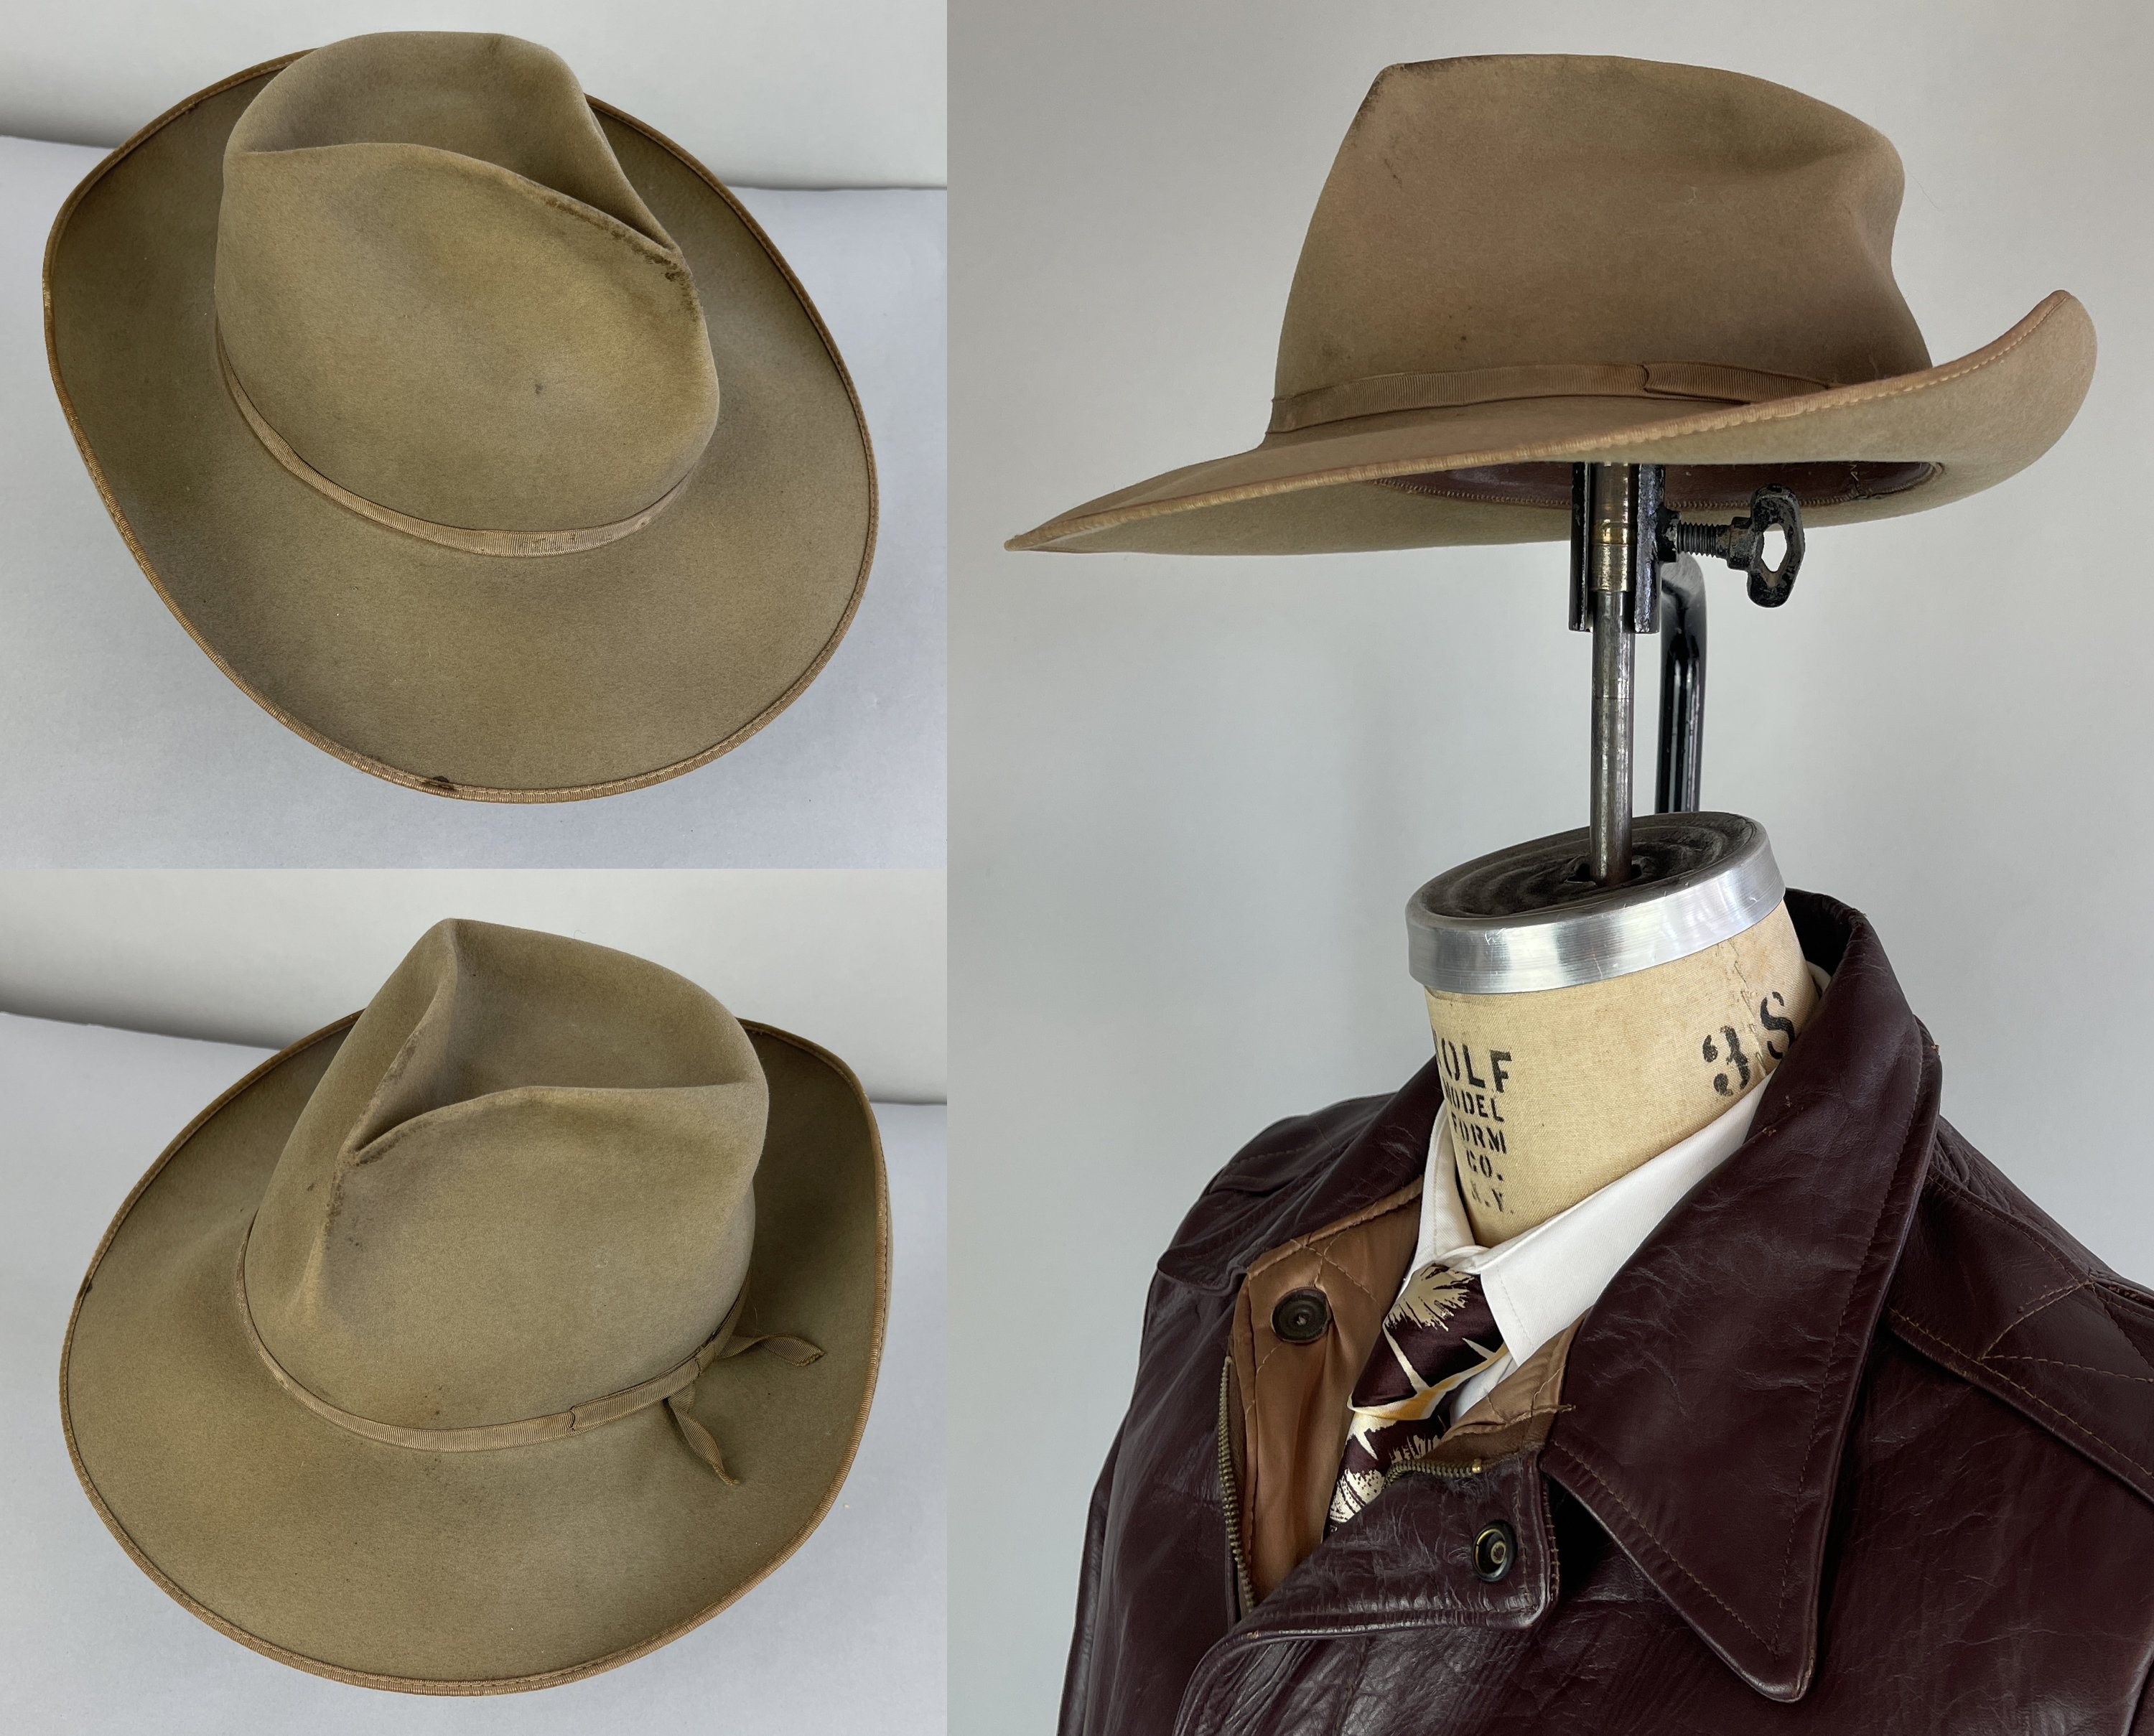 Indiana Jones Fedora Hat With Ribbon Band 